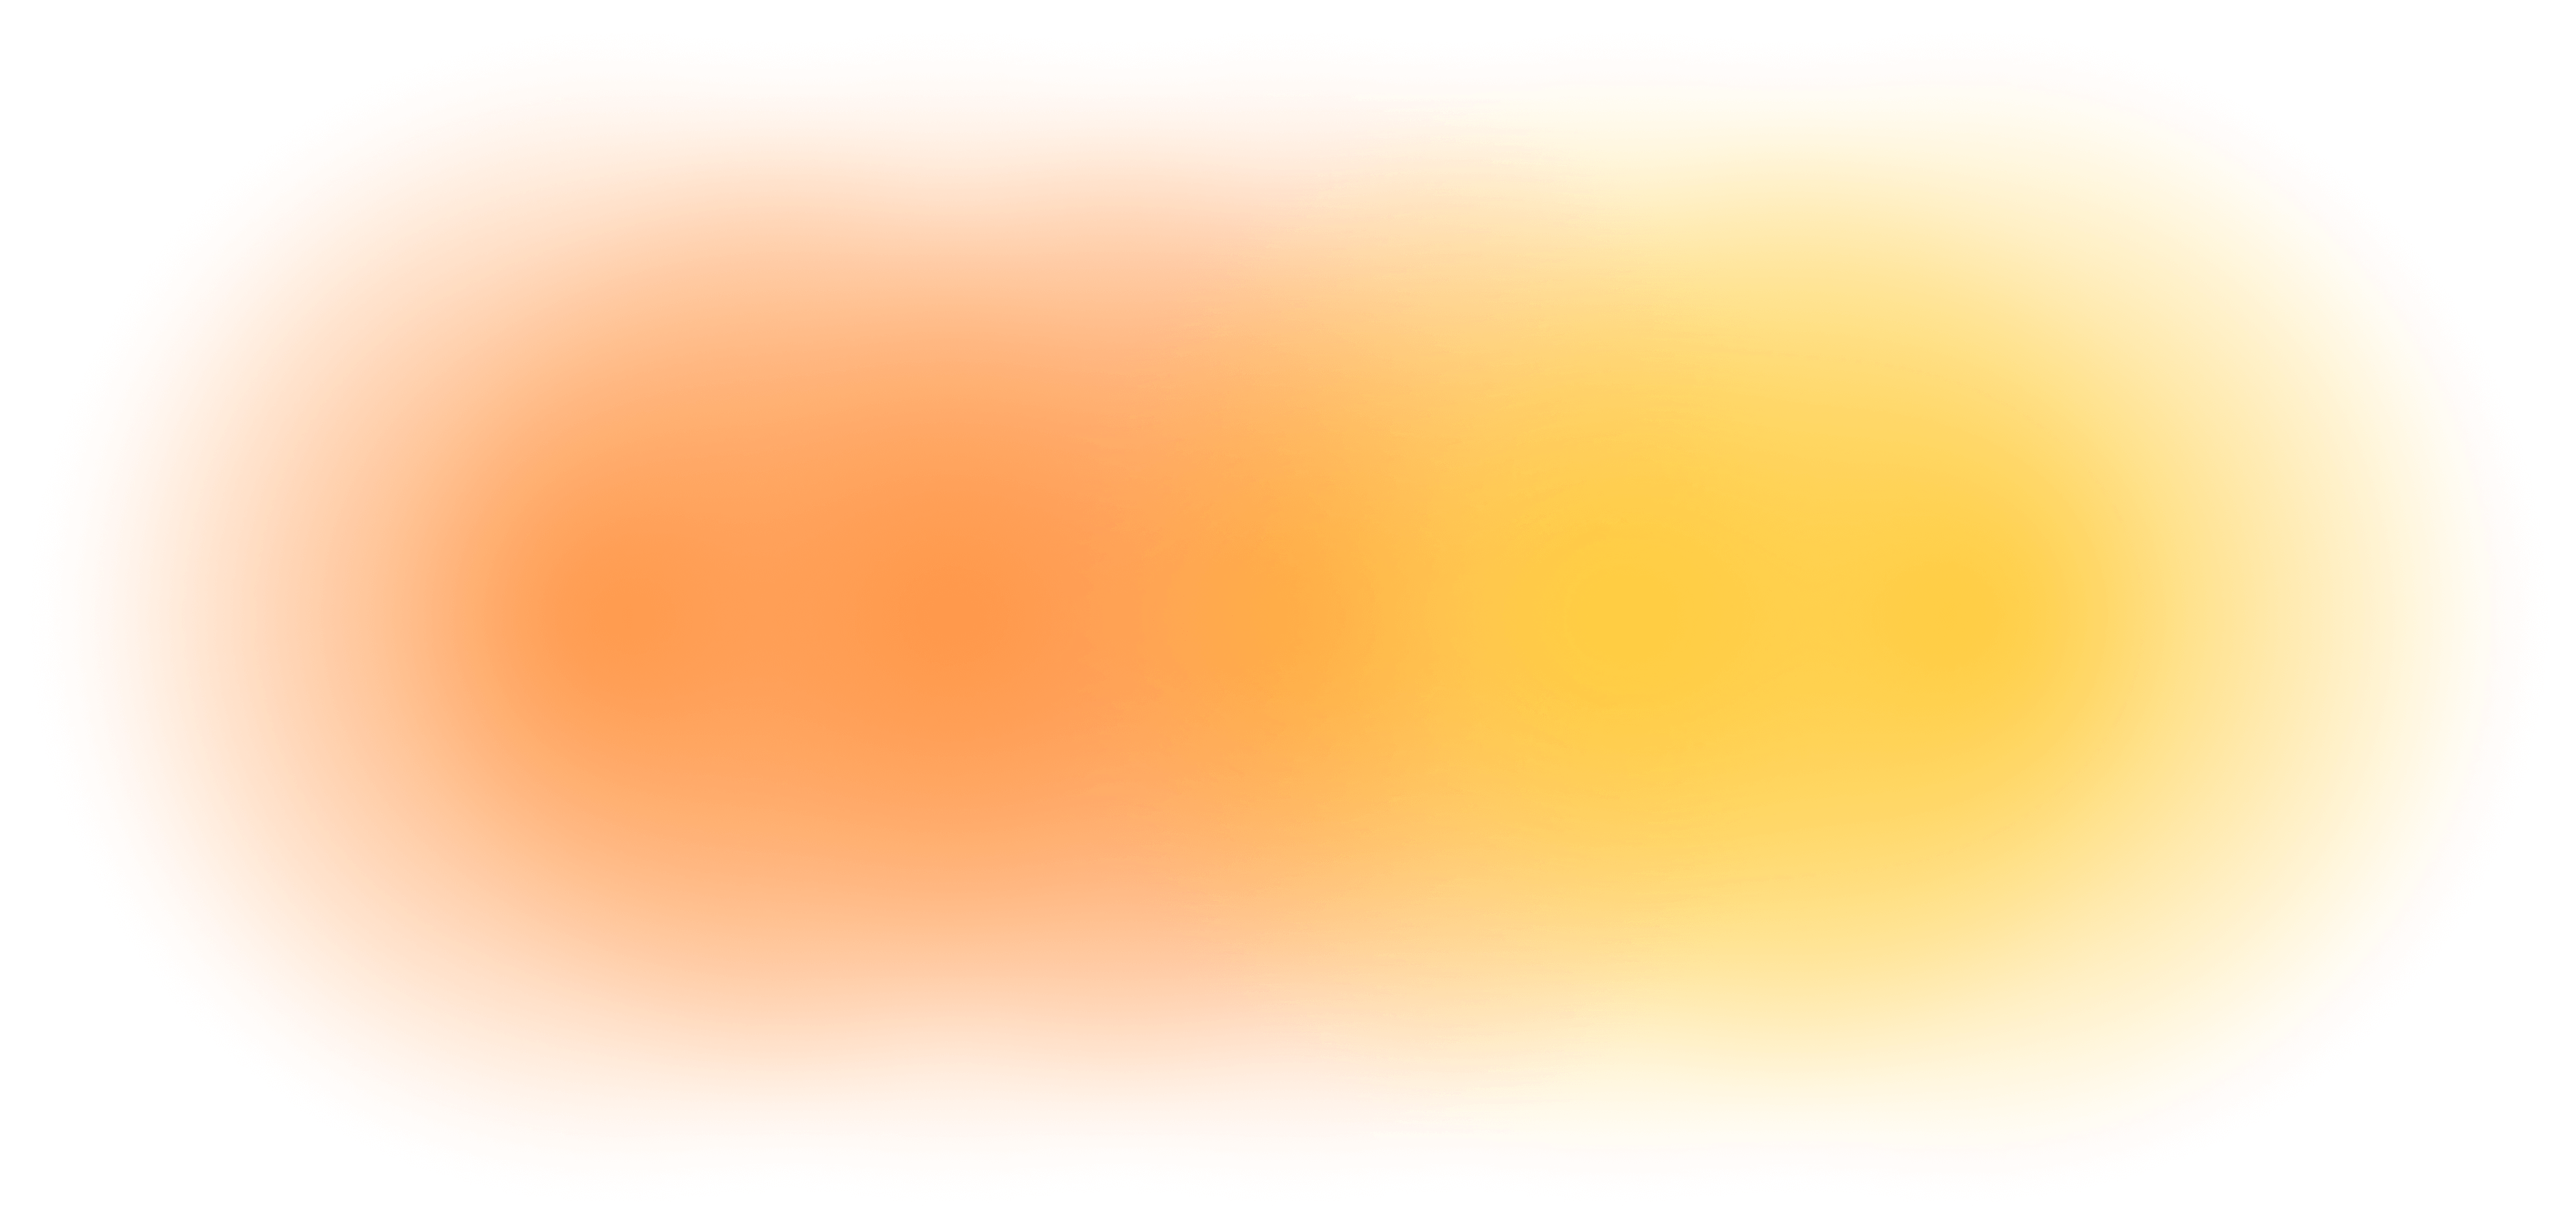 background gradient of warm gold and orange tones